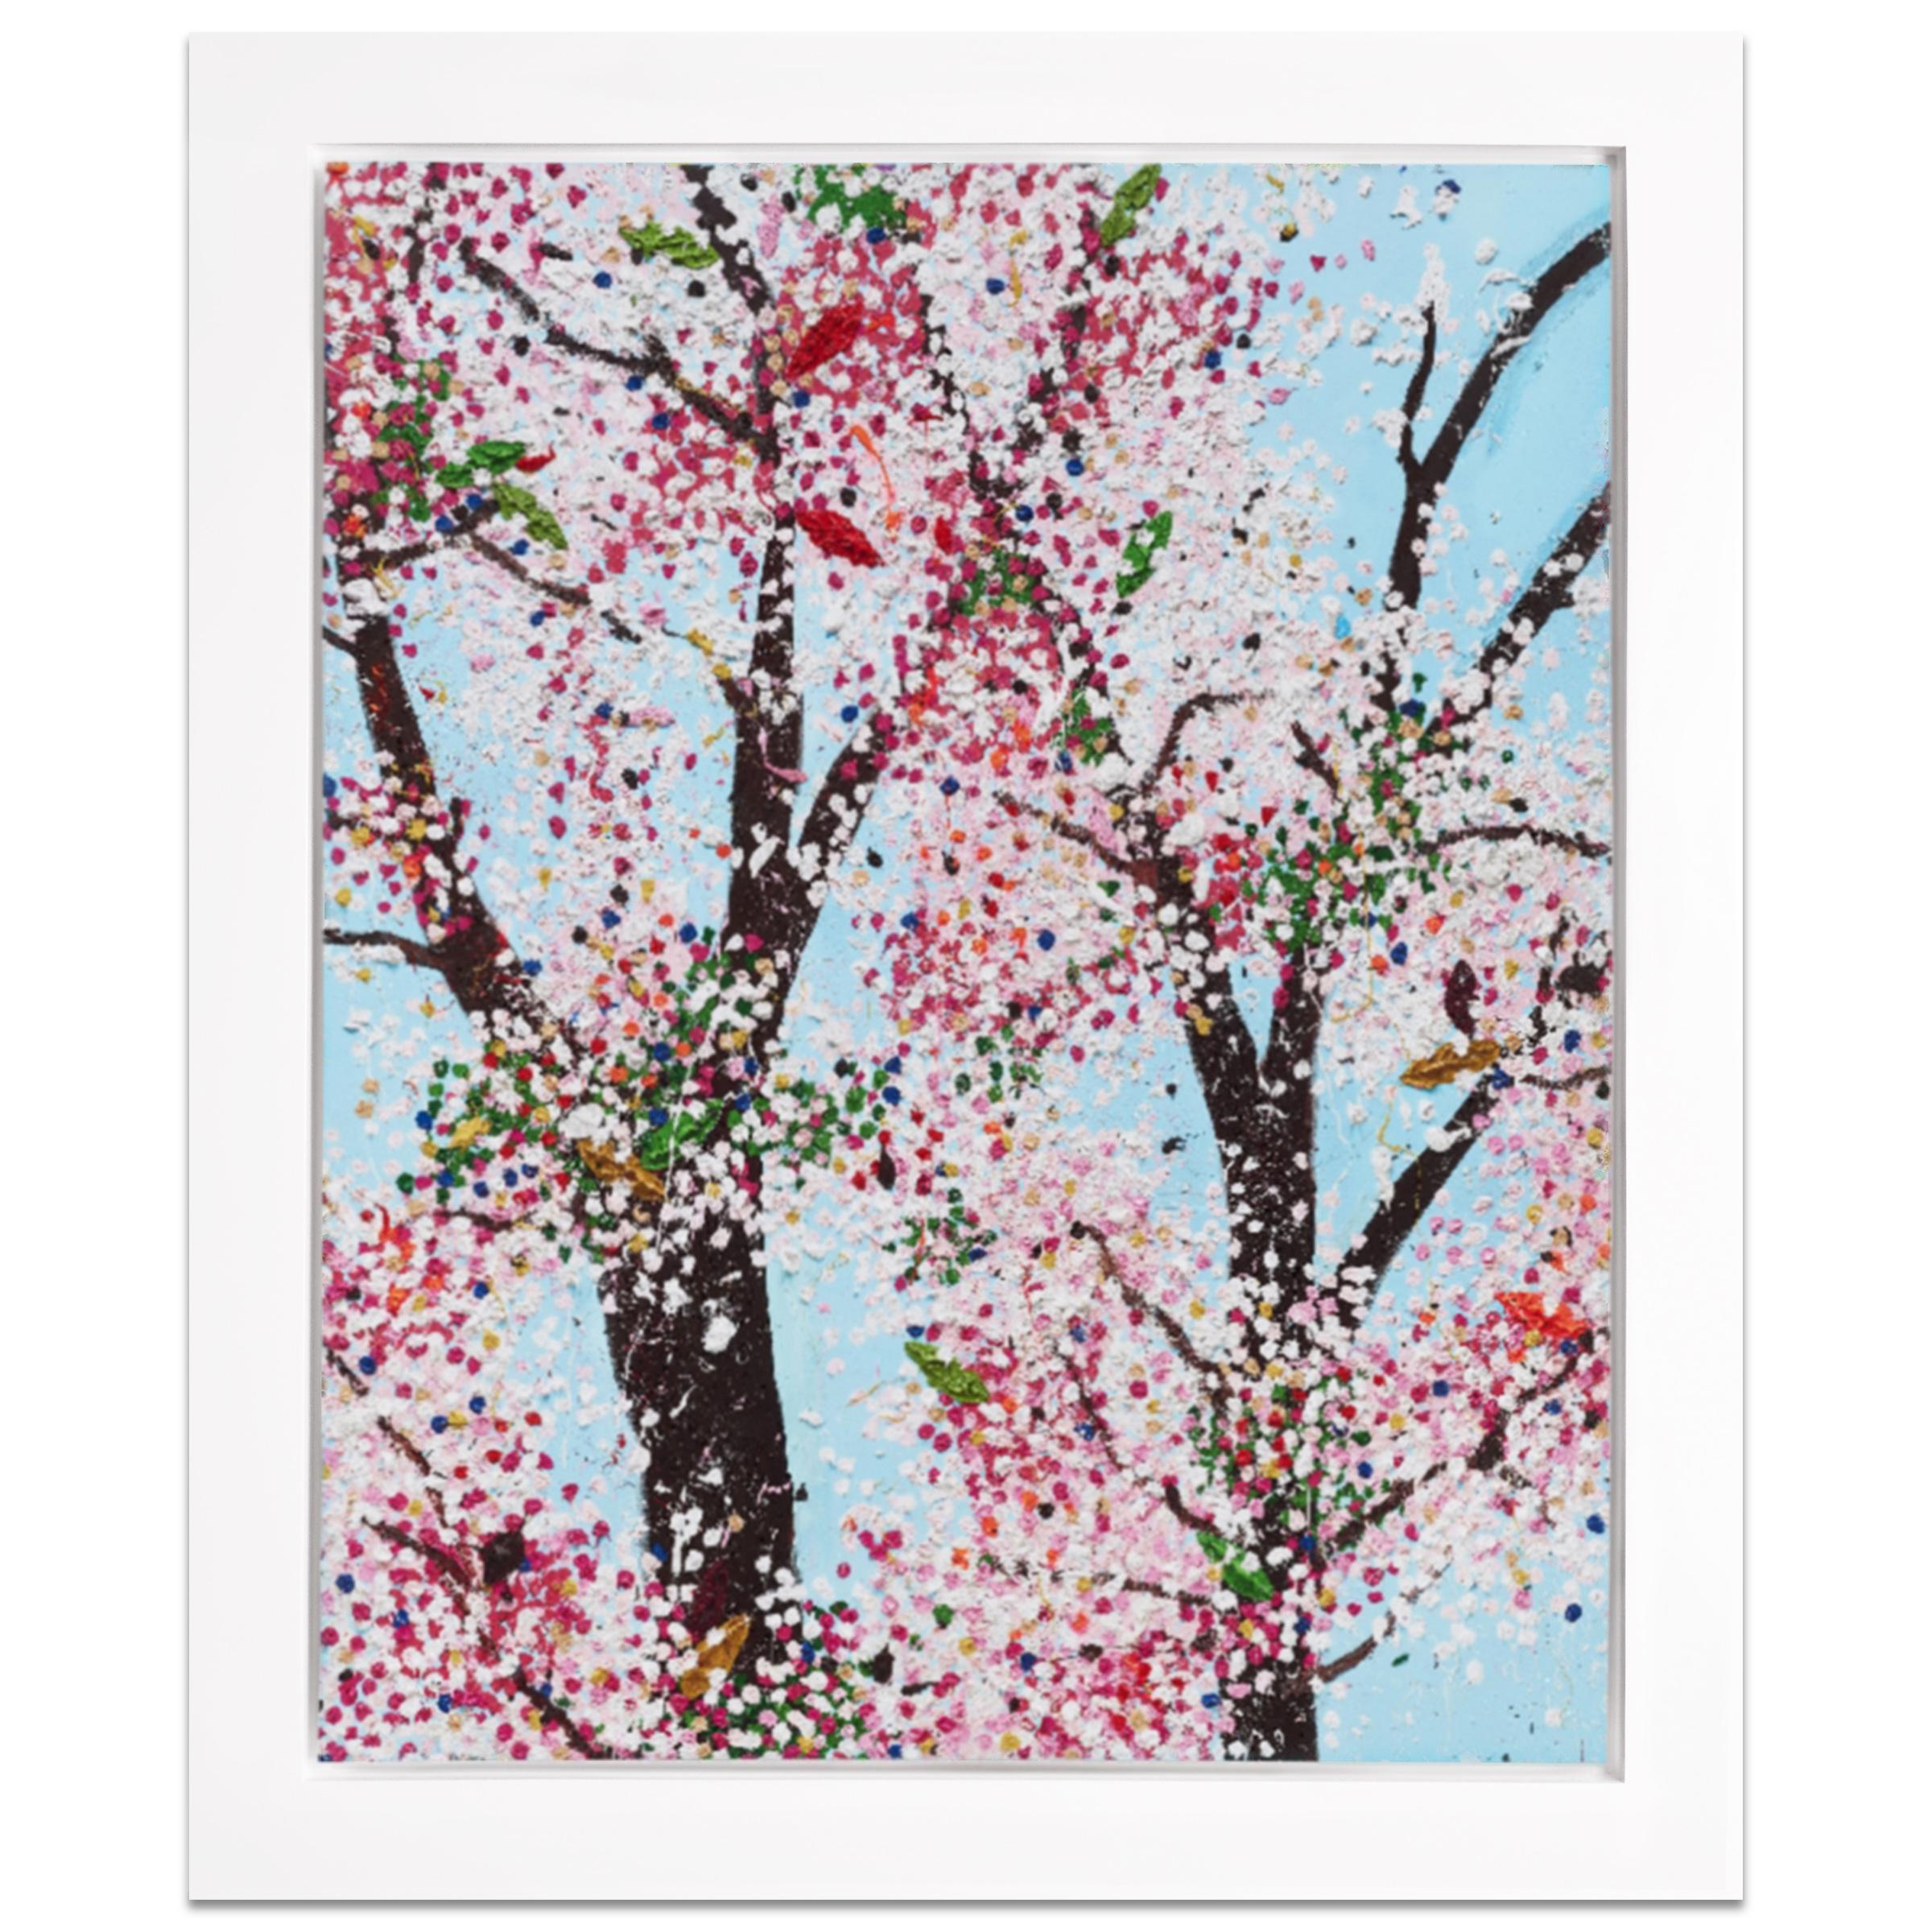 Damien Hirst Landscape Print - The Virtues 'Honesty', Limited Edition 'Cherry Blossom' Landscape, 2021